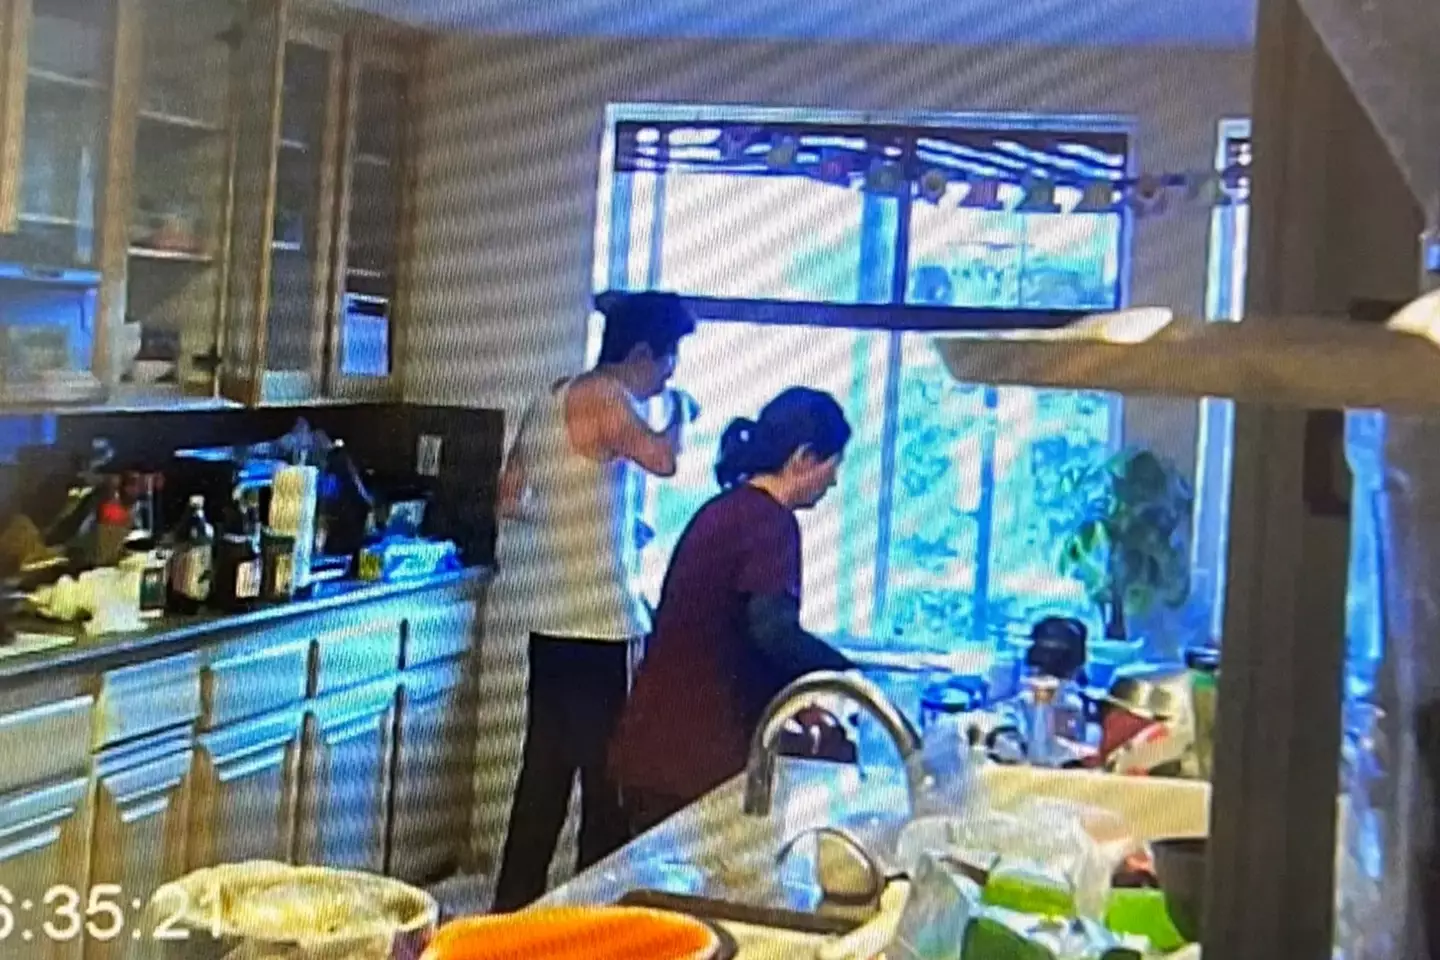 Her husband set up a secret camera in their kitchen.